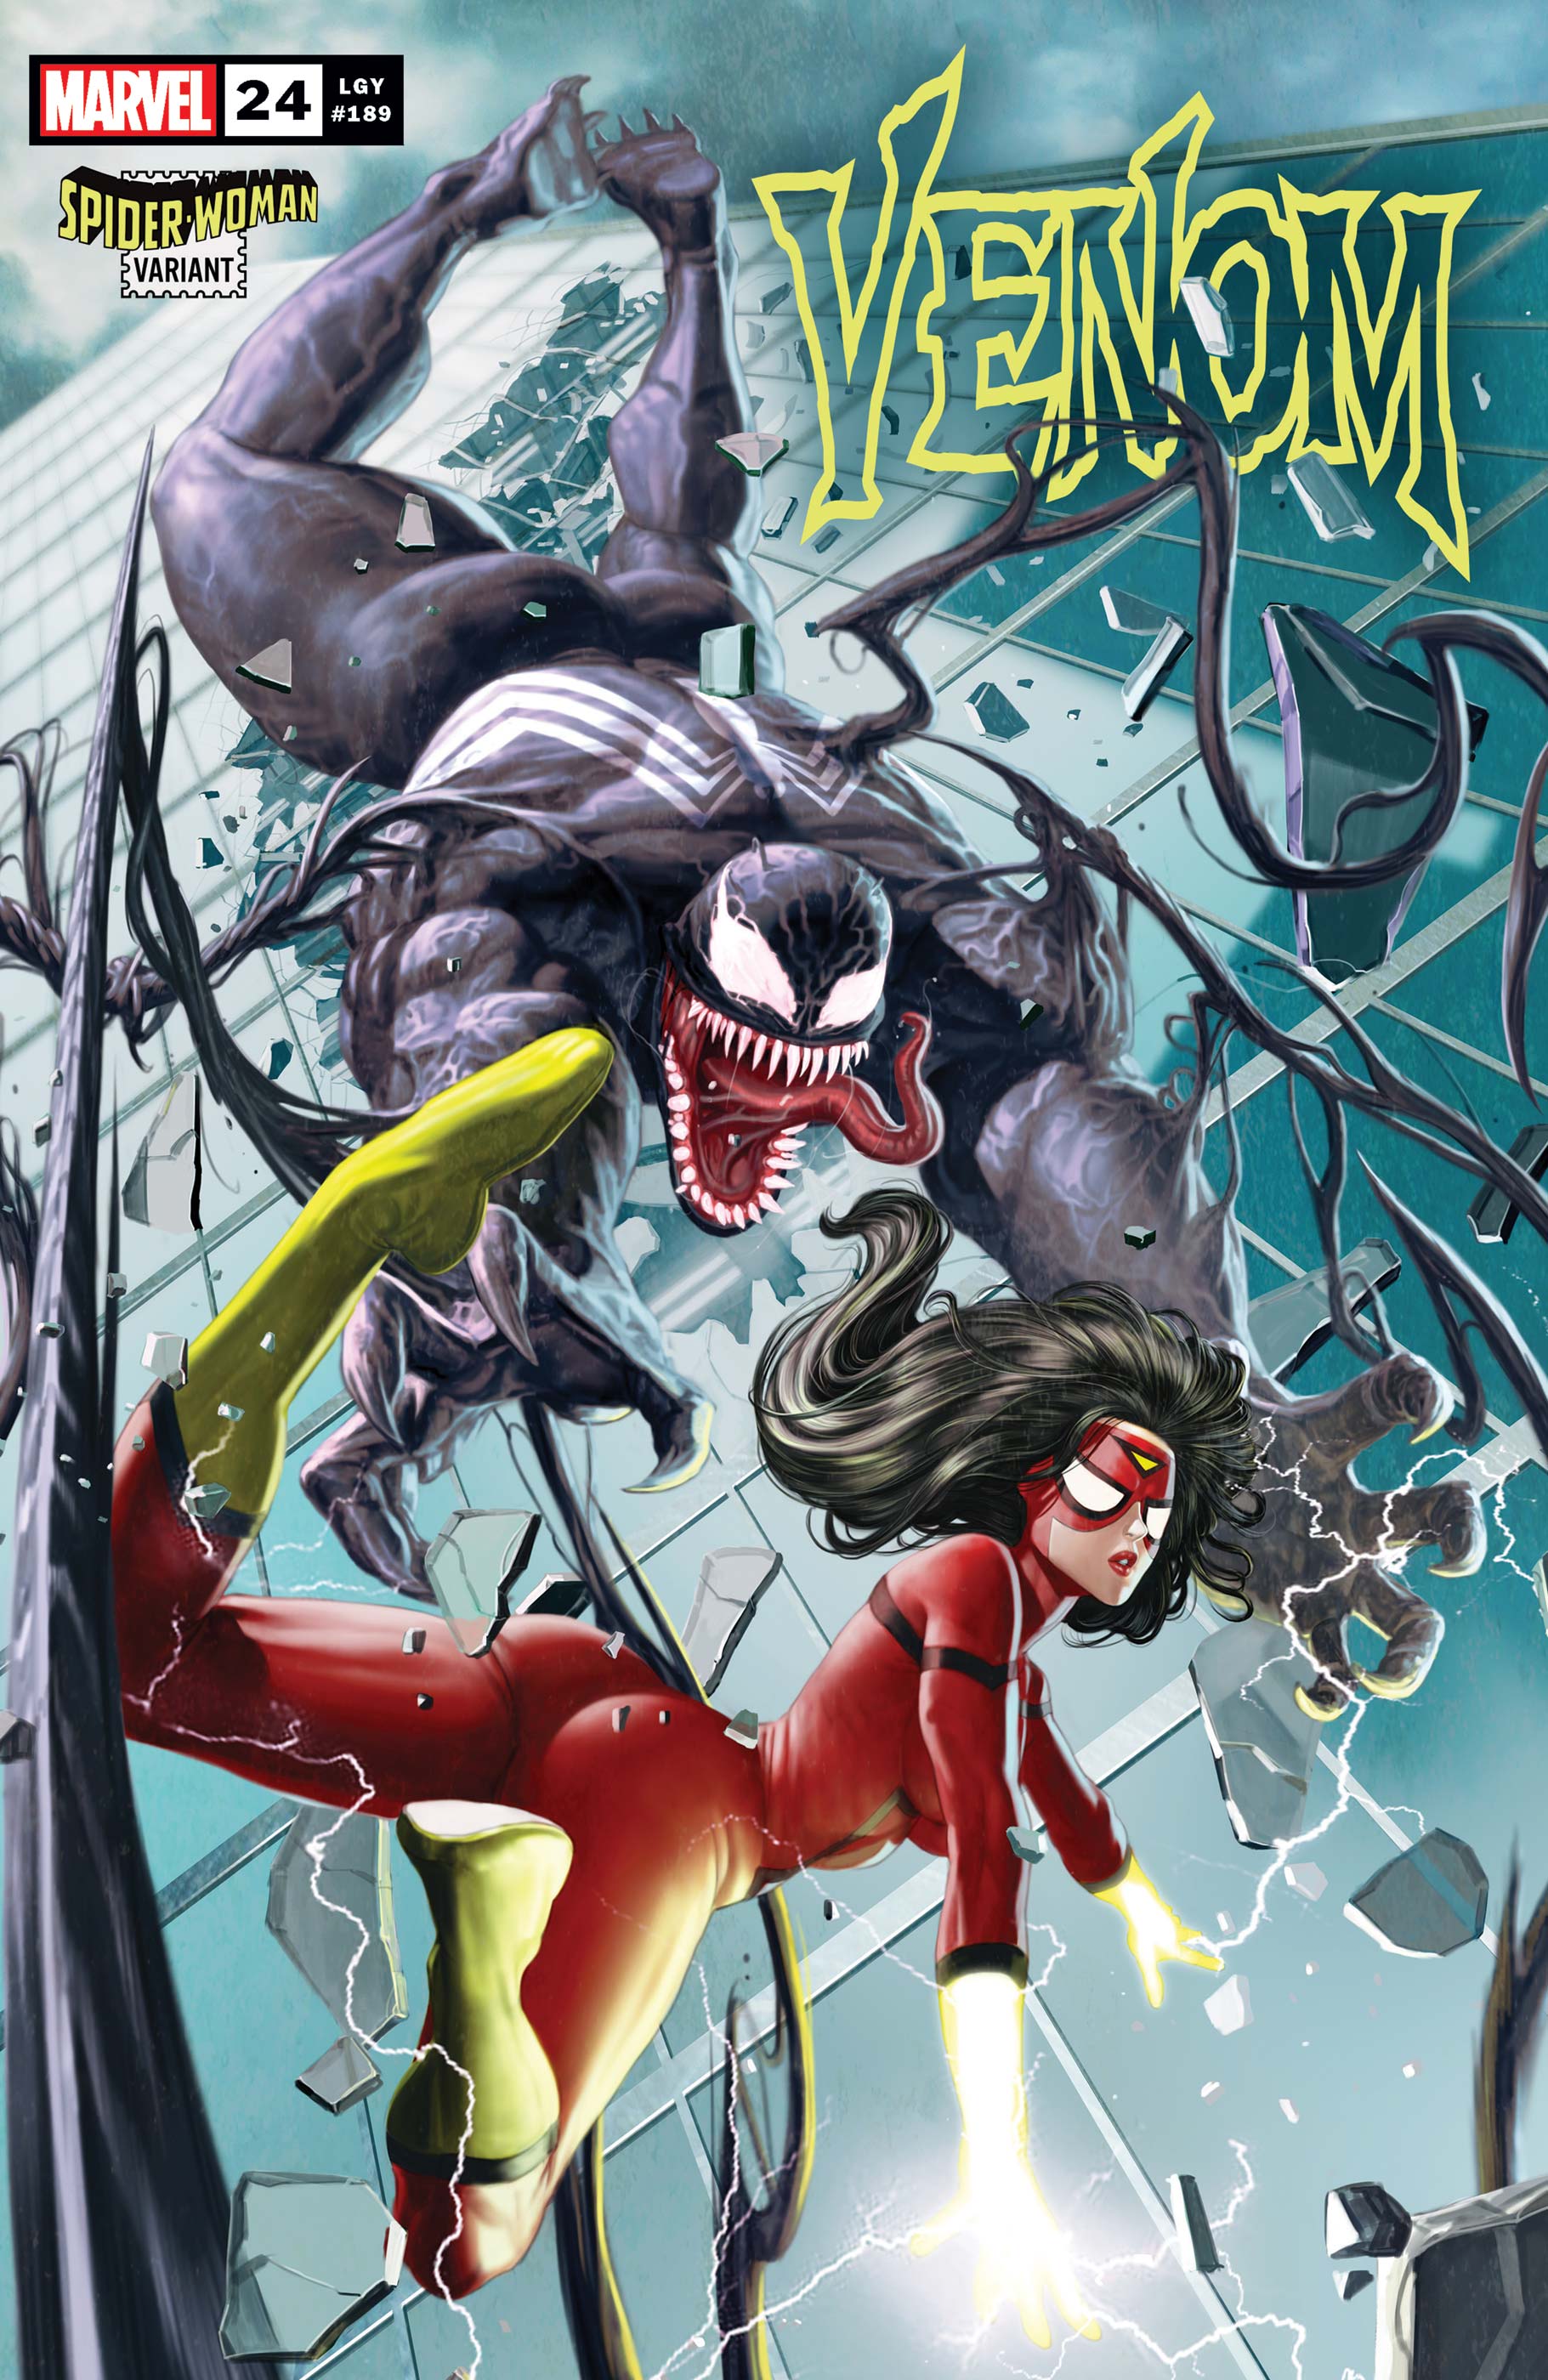 Venom #24 Rock-He Kim Spider-Woman Variant (2018)